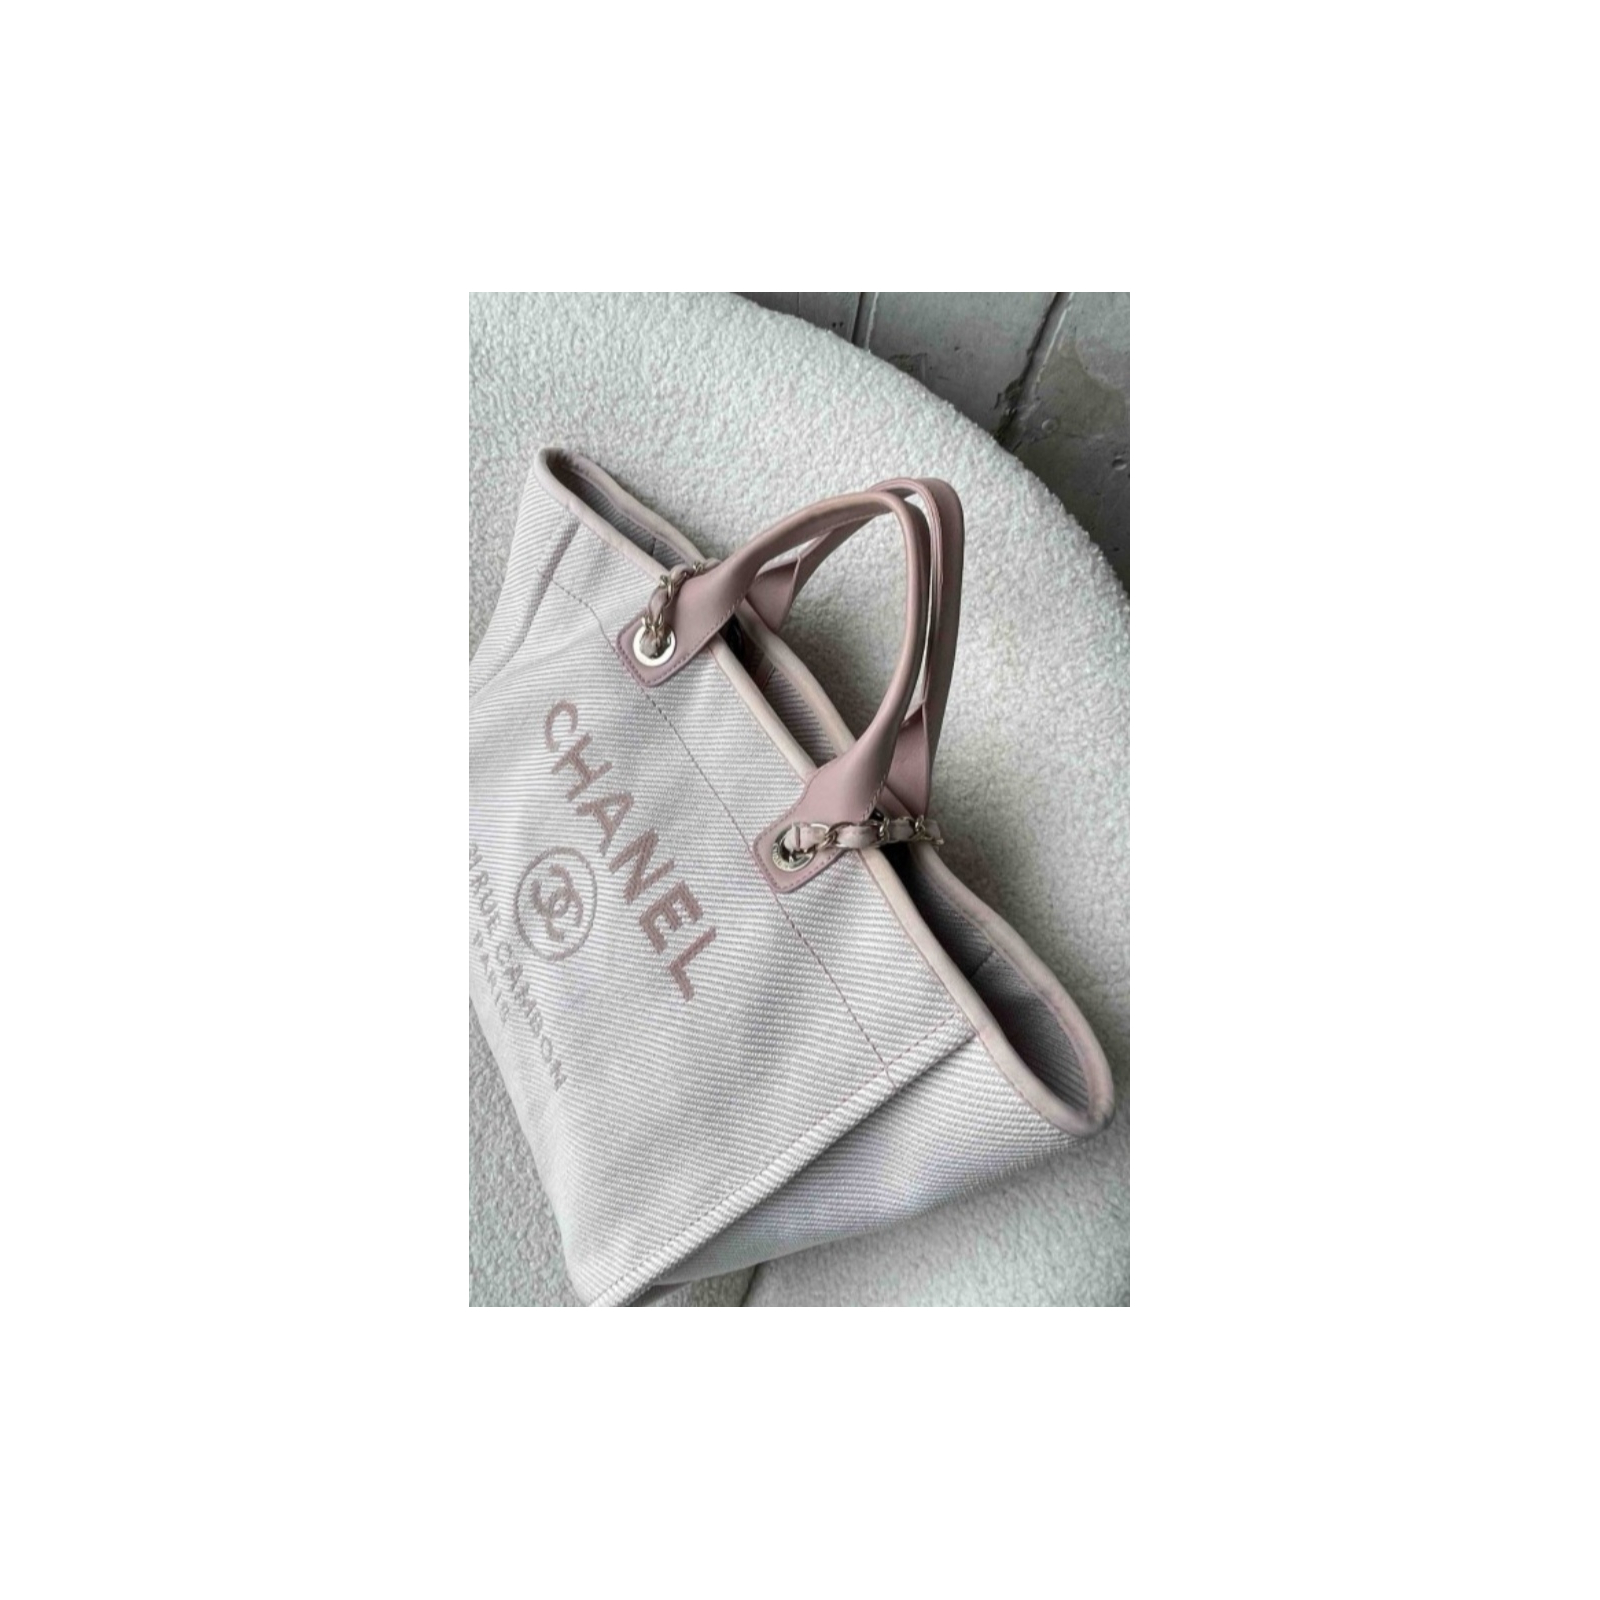 Torba Chanel - shopper bag